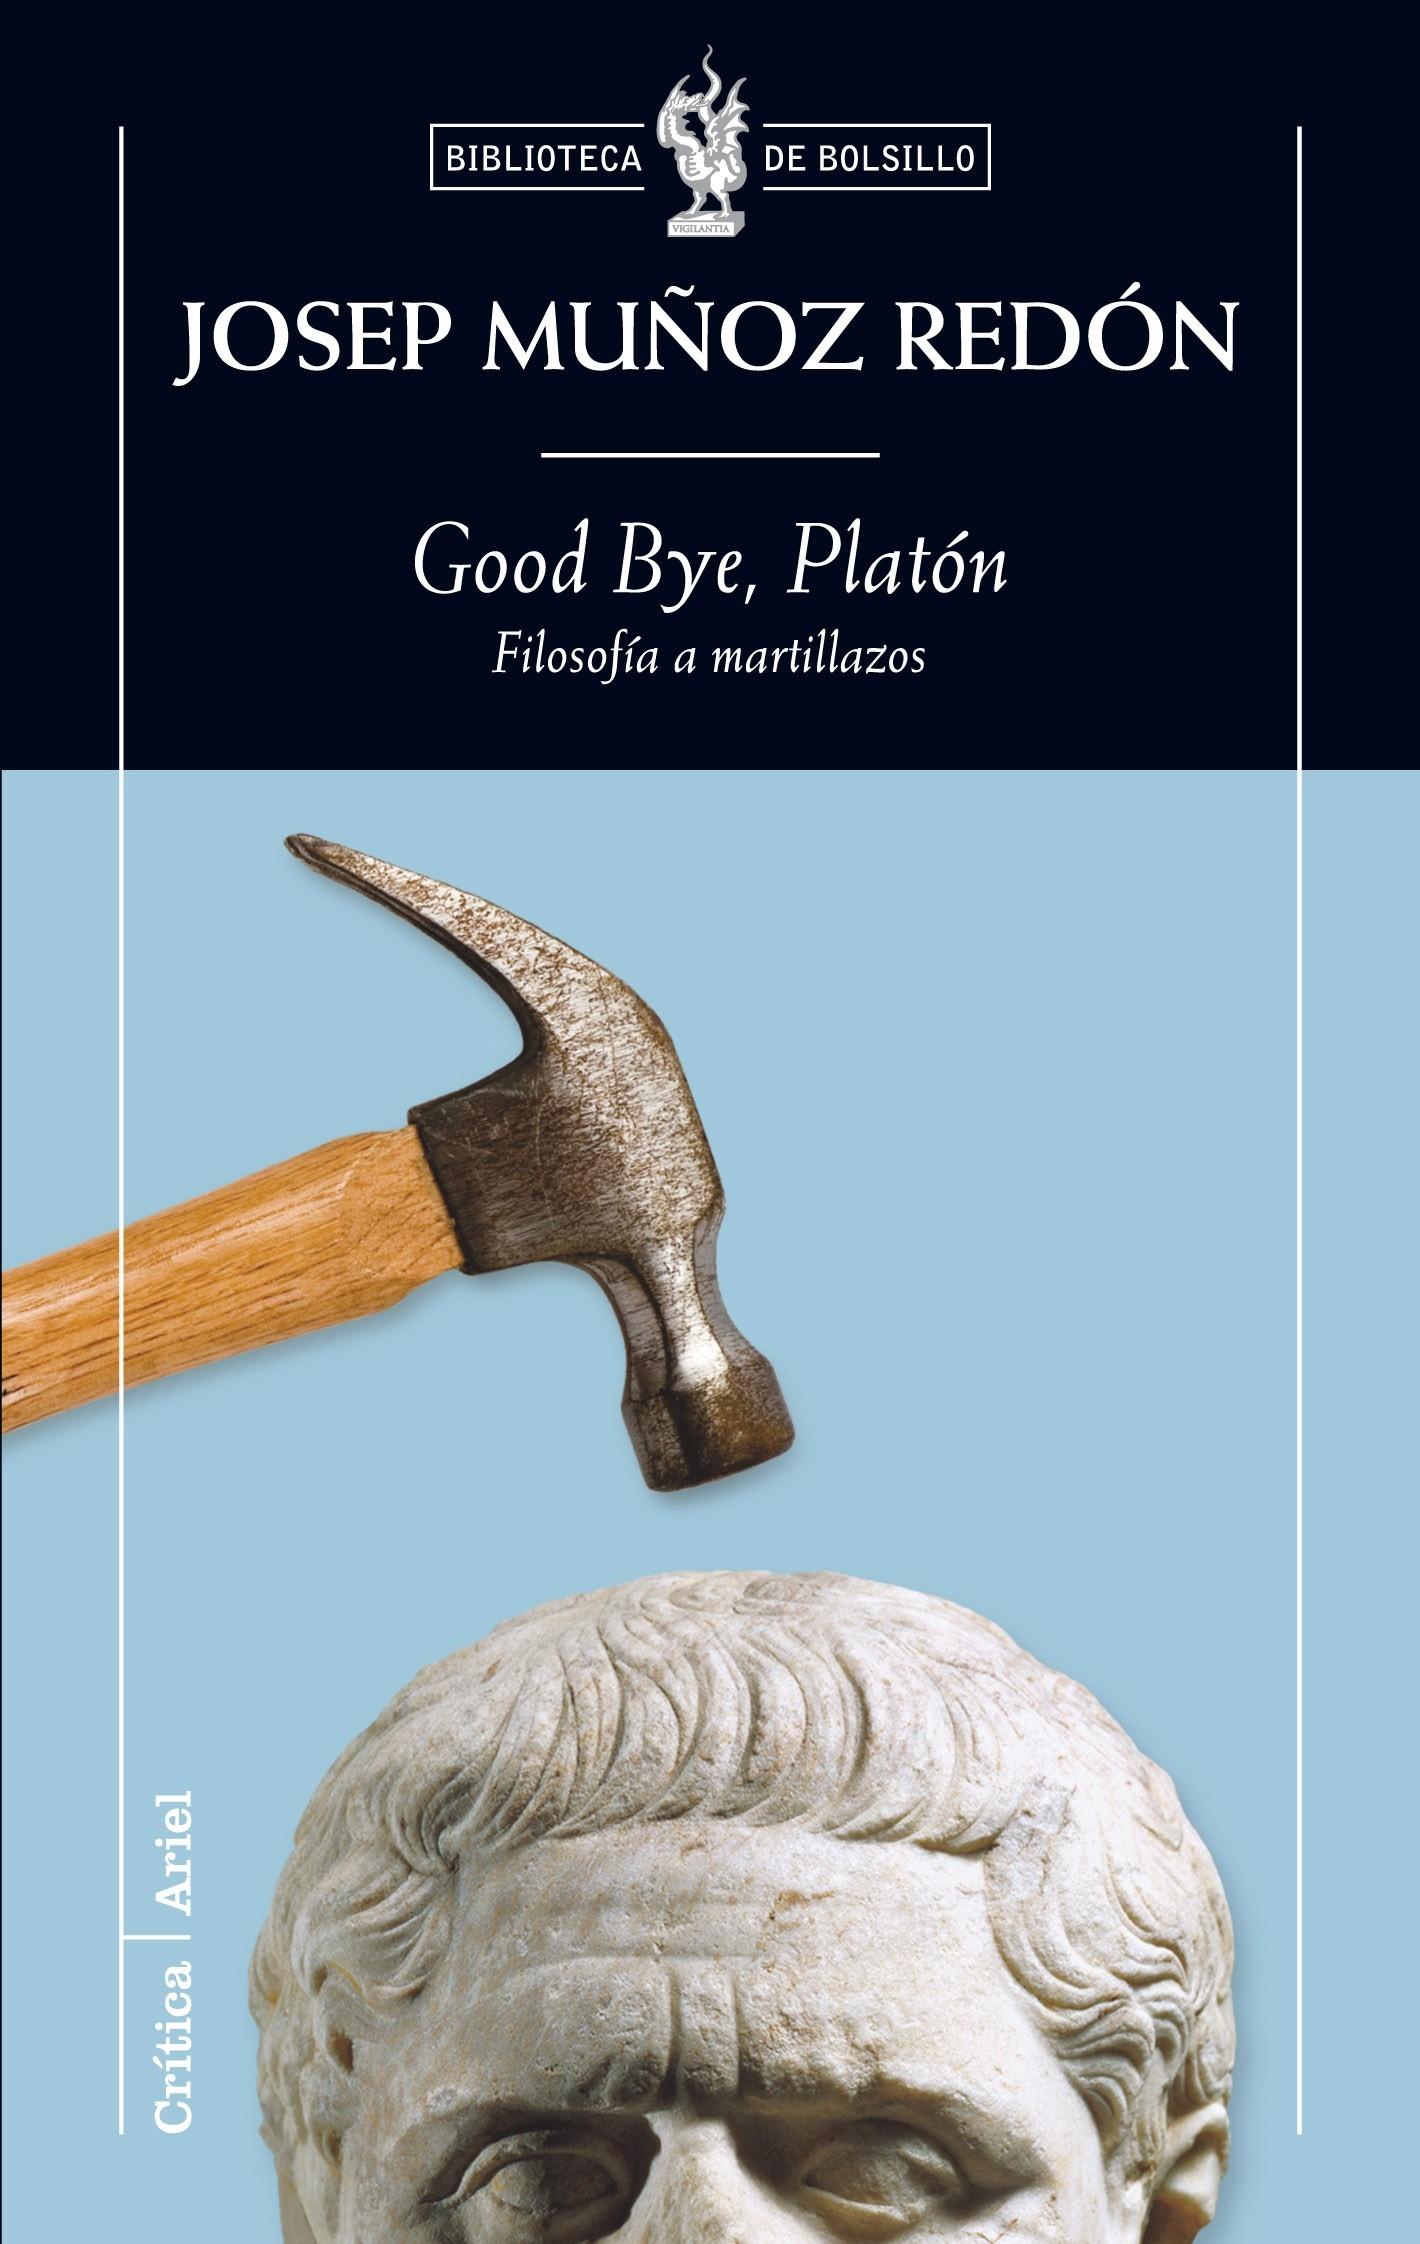 Good Bye, Platón "FILOSOFIA A MARTILLAZOS"